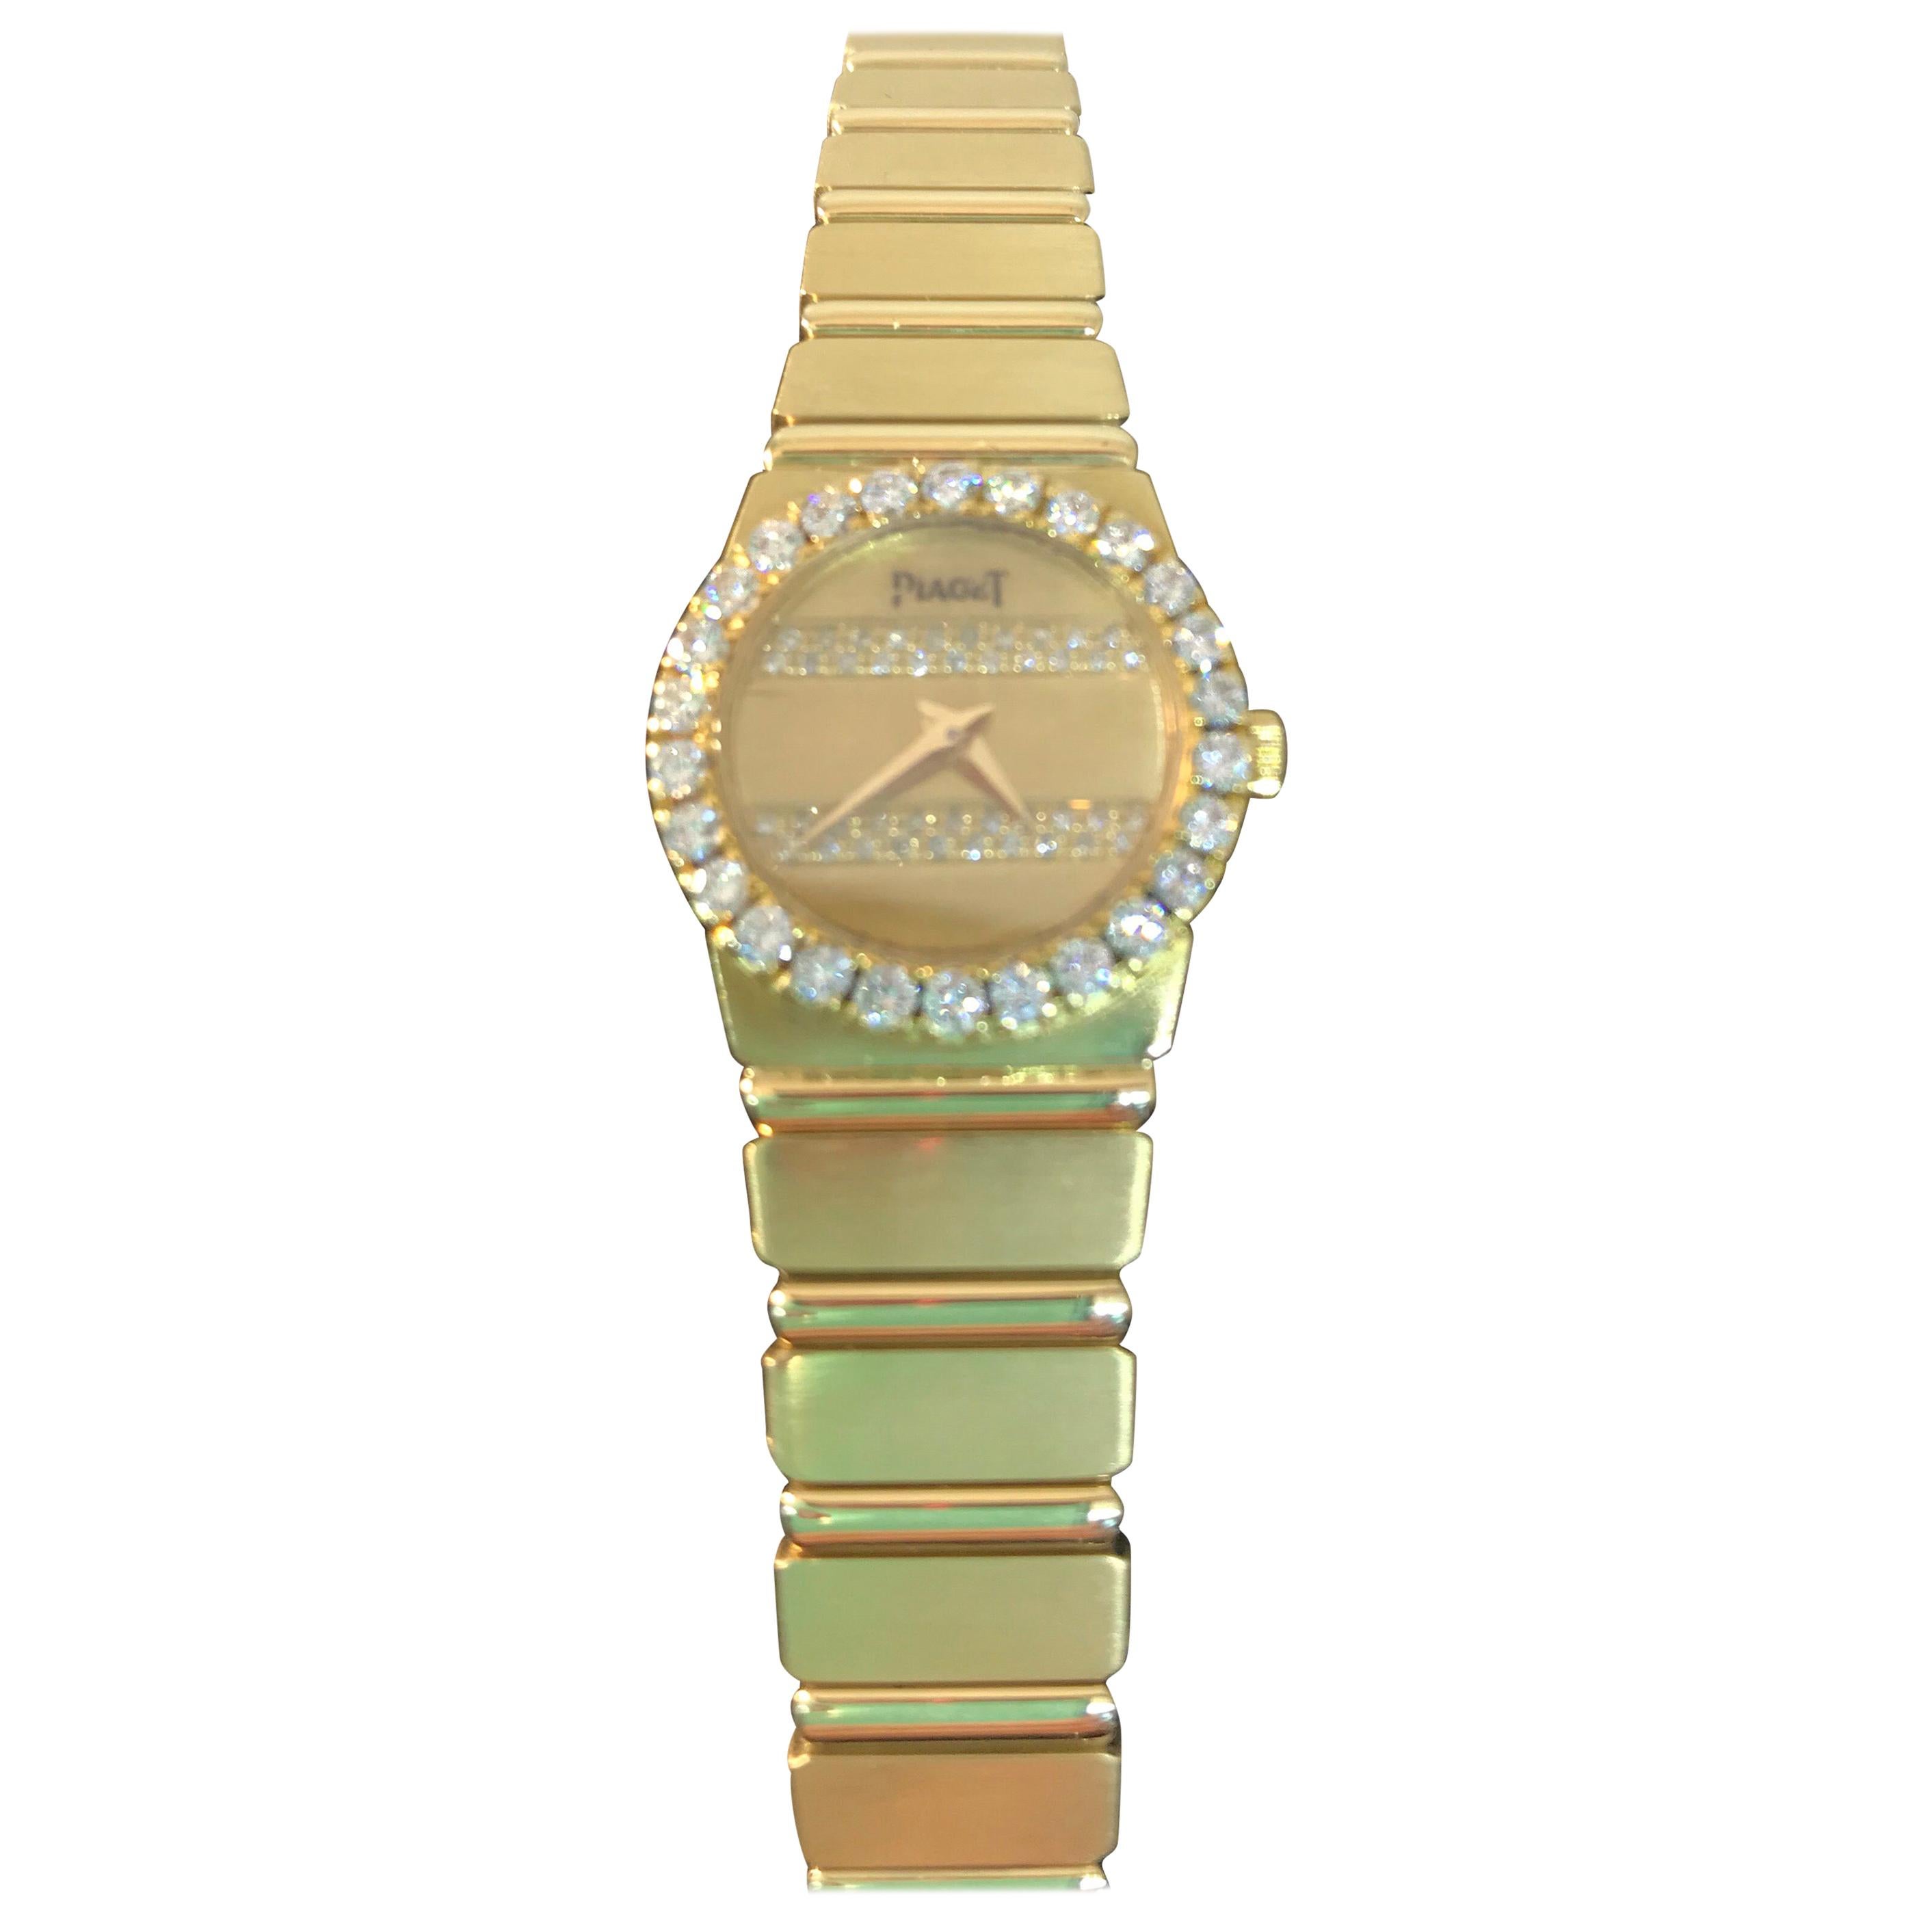 Piaget Polo 18 Karat Gold Diamond Bezel and Dial Ladies Bracelet Watch 8296 For Sale